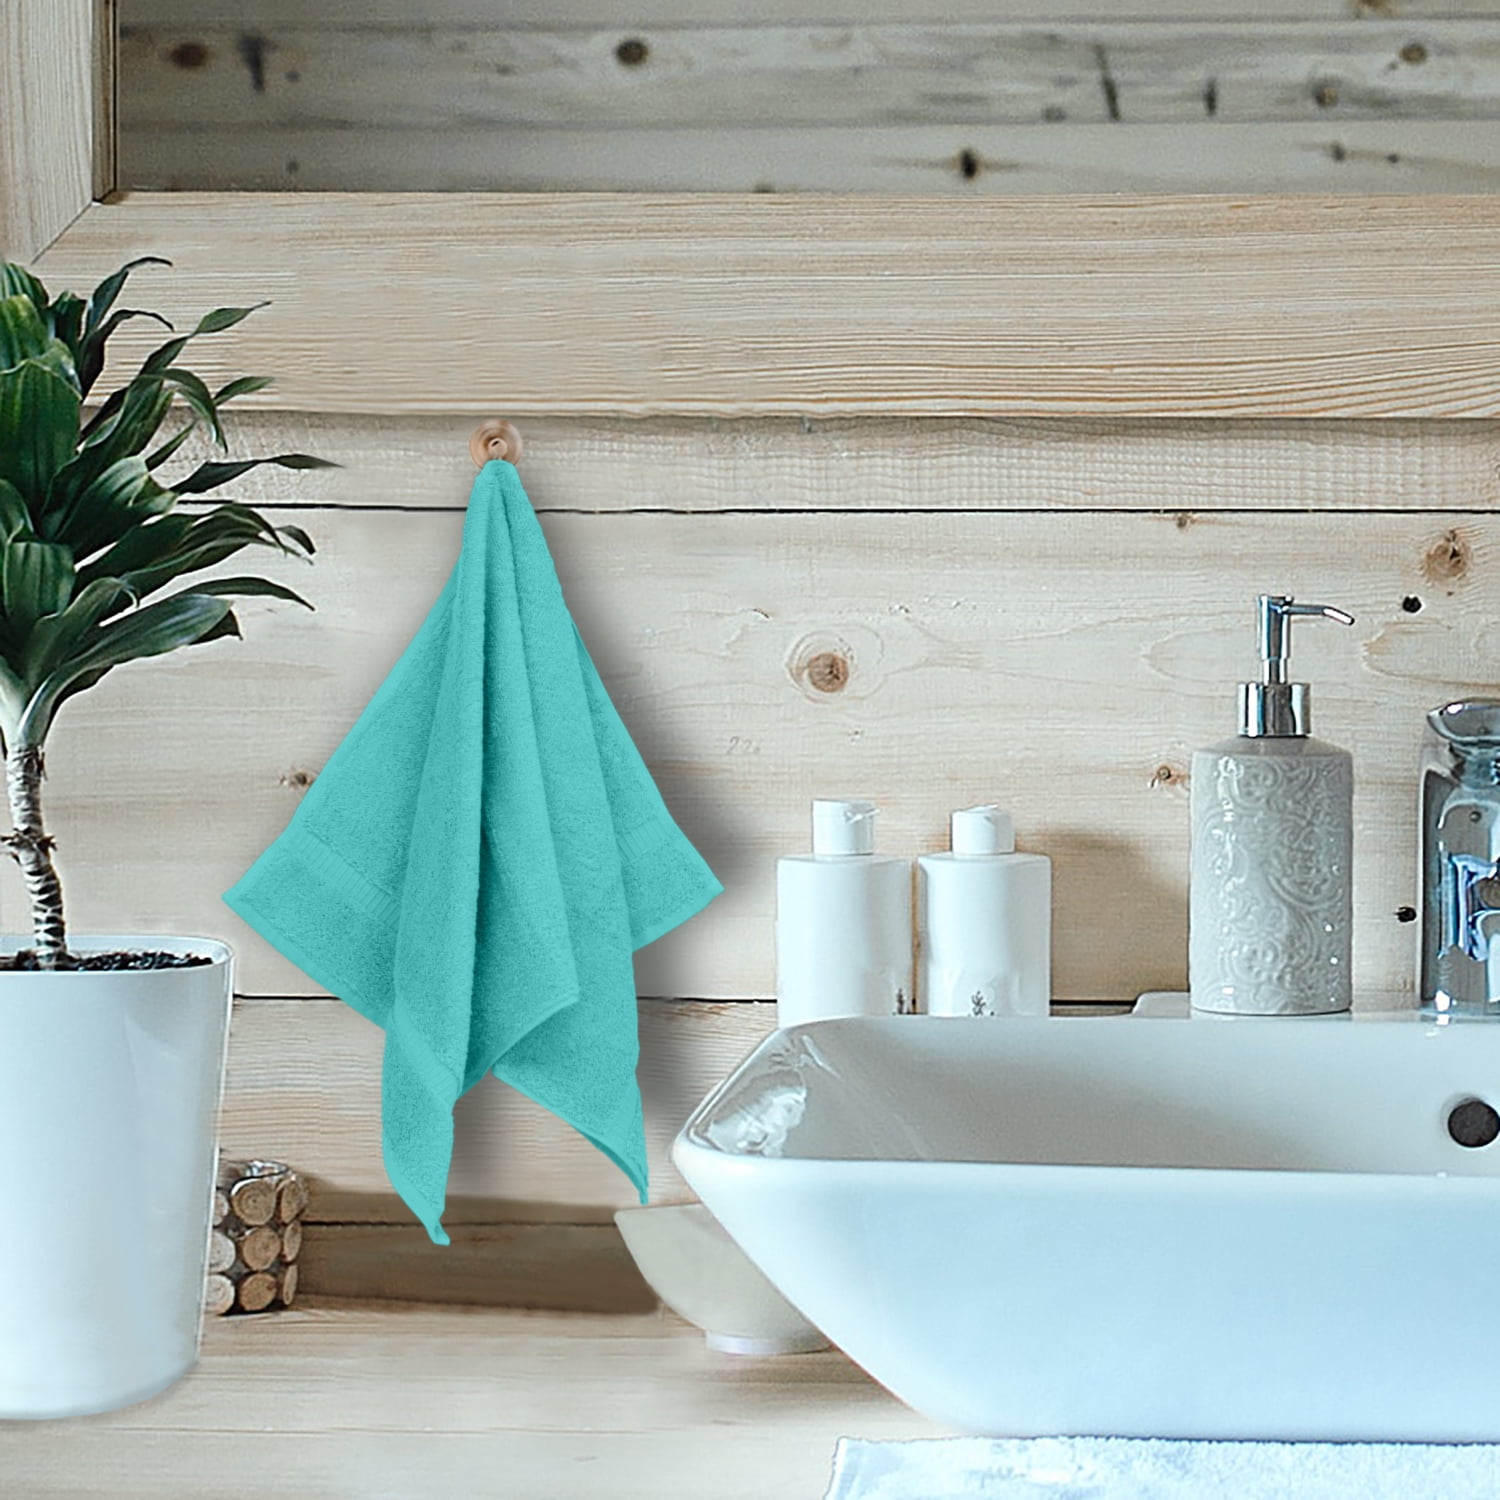 Plush Towel Turkish Cotton Hand Towel for Bathroom, Denim & 16 x 30 Luxury Bath Hand Towel, Soft and Absorbent Drying Towel